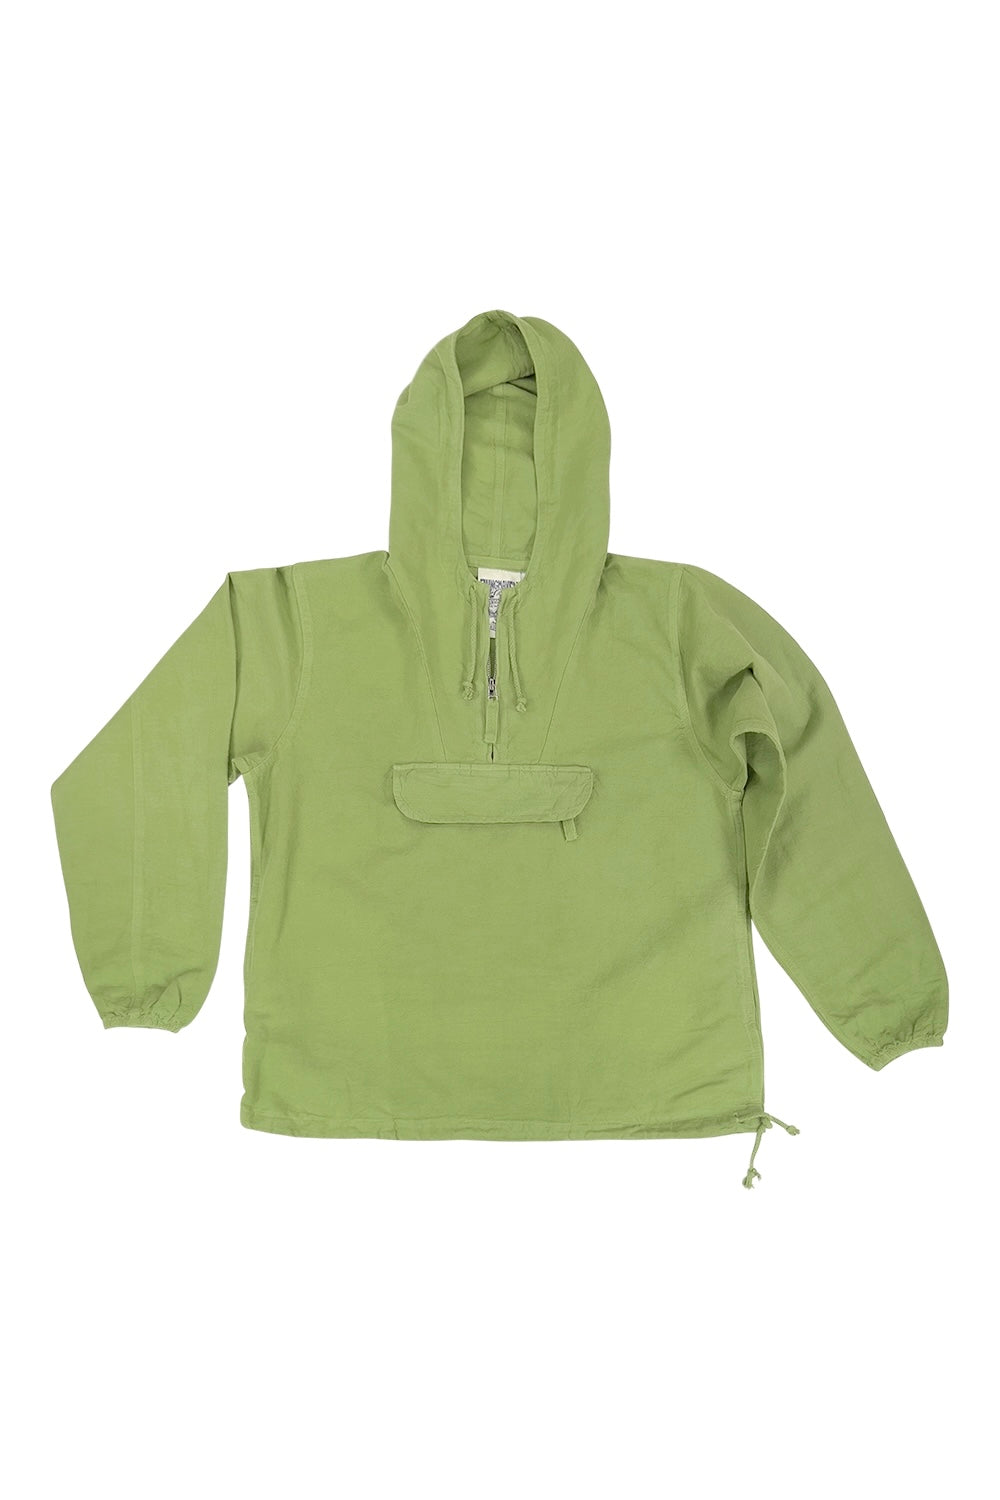 Shoreline Anorak Jacket | Jungmaven Hemp Clothing & Accessories / Color: Dark Matcha